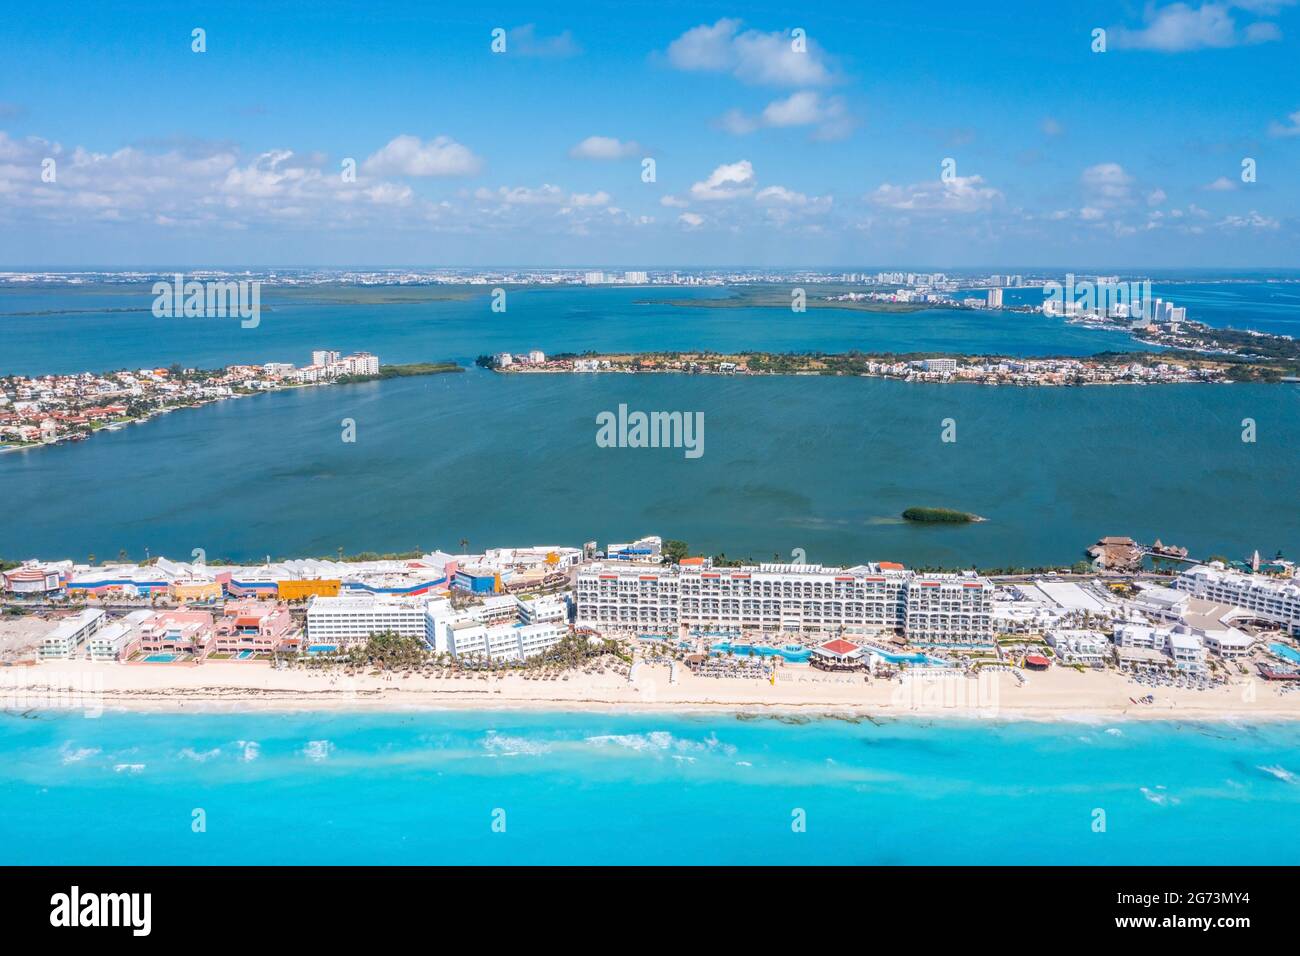 Aerial view of Punta Norte beach, Cancun, Mexico. Stock Photo